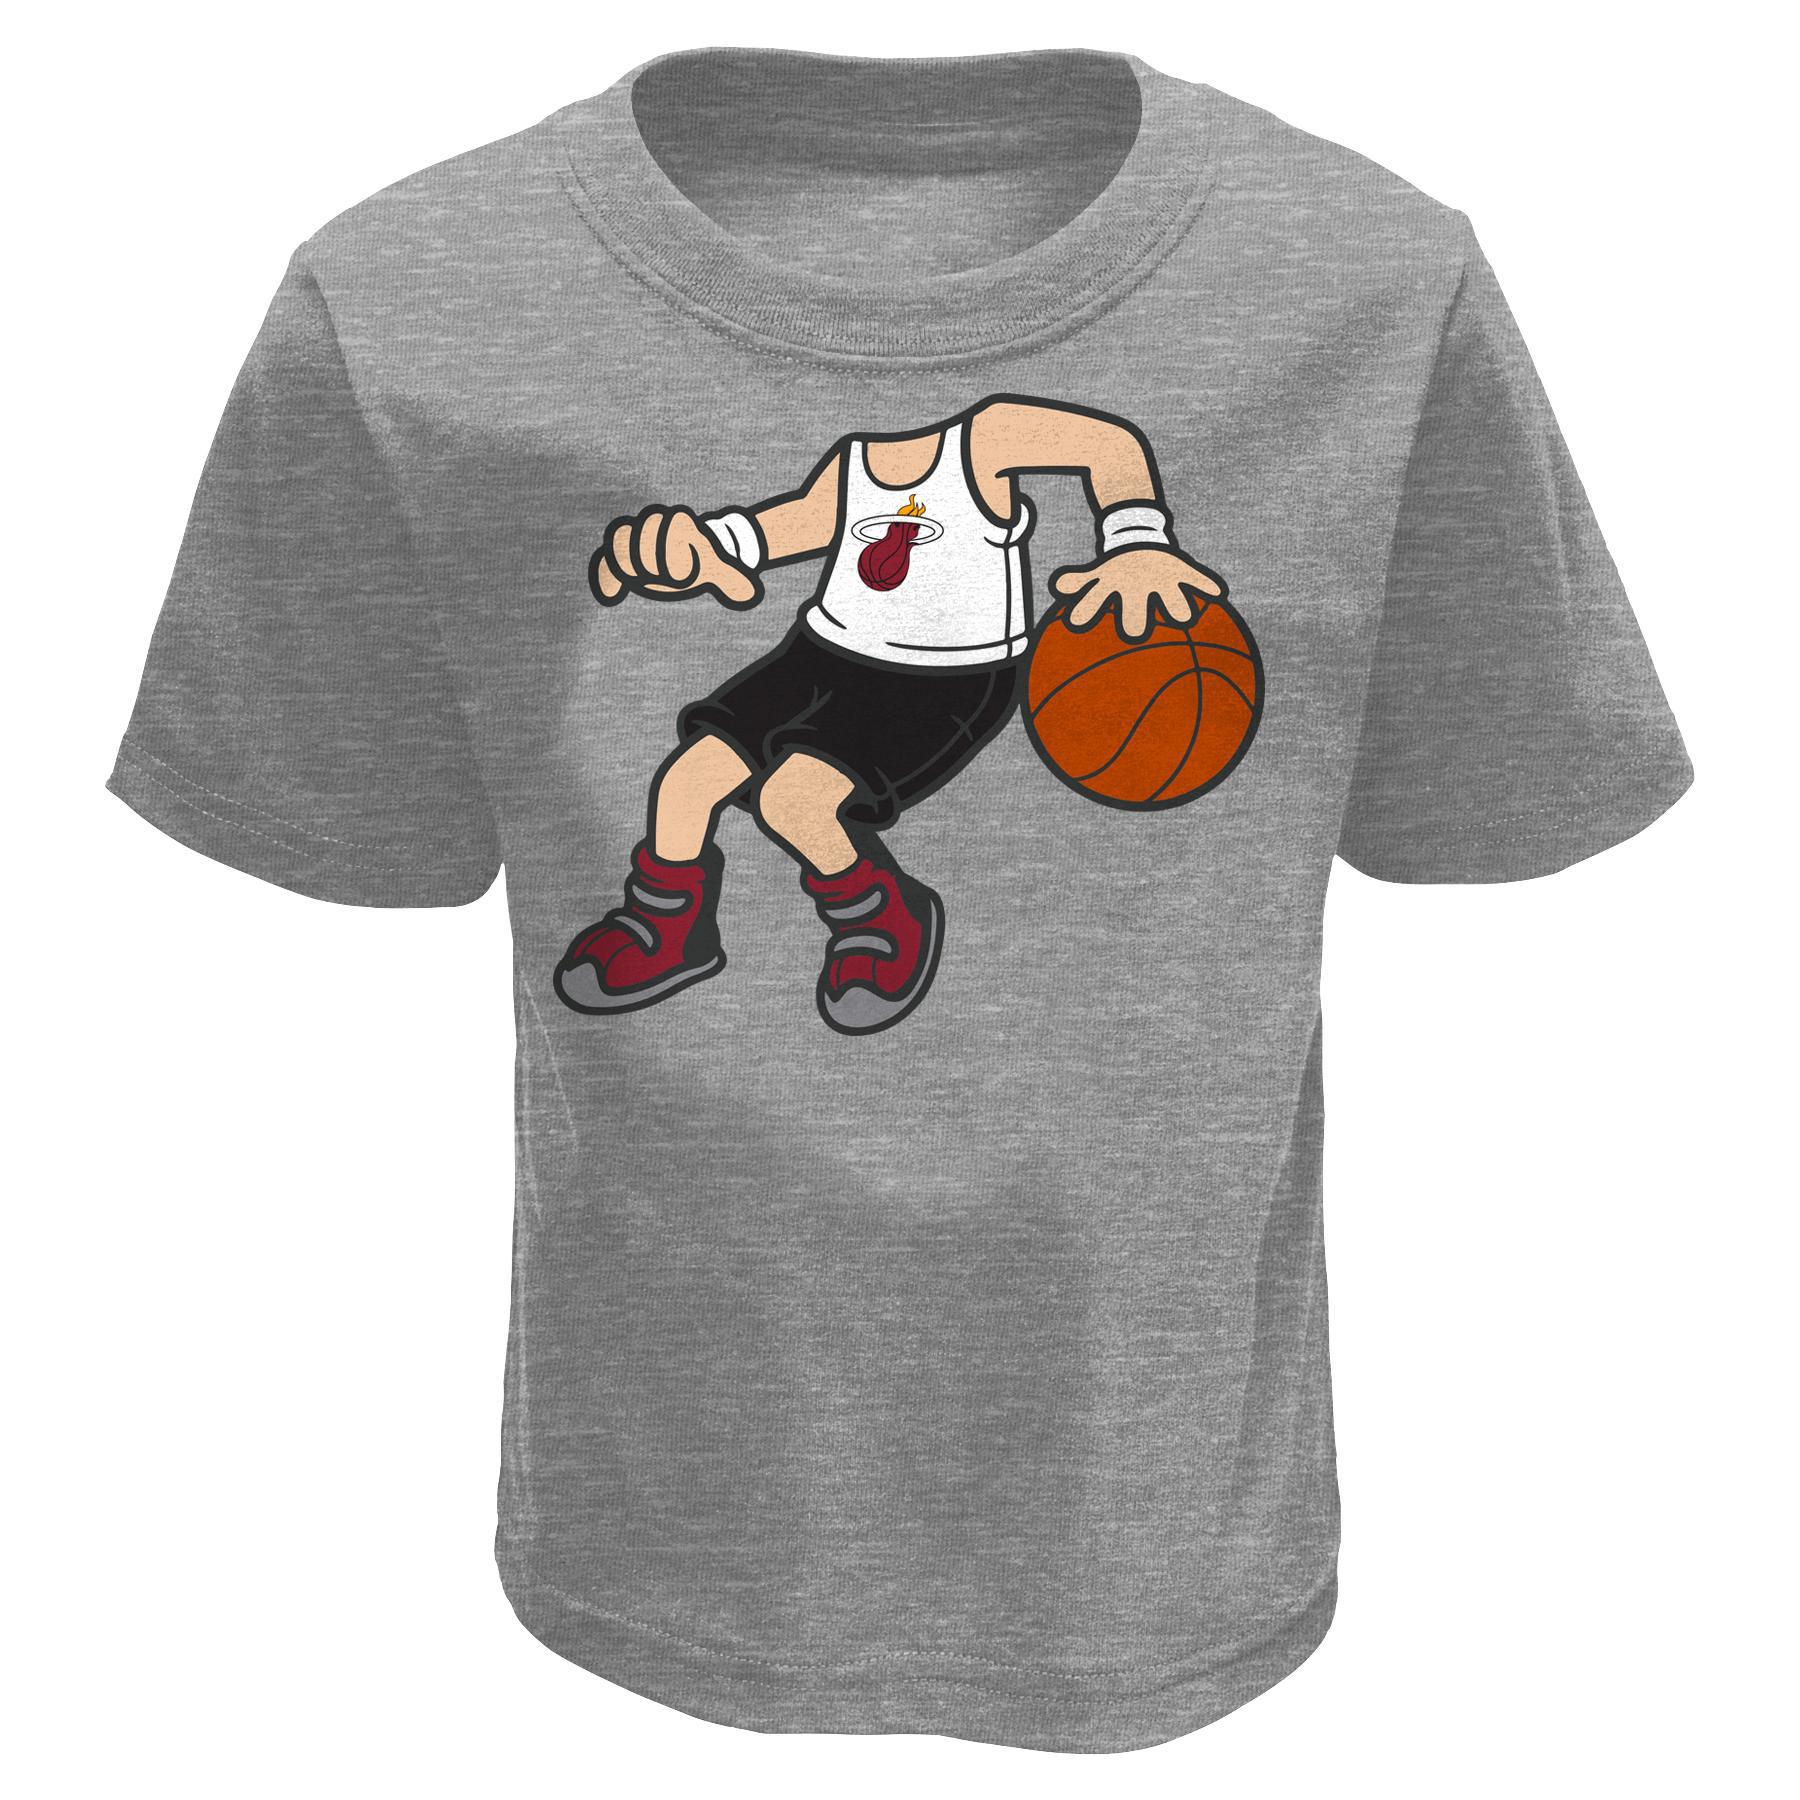 NBA Toddler Boys' Graphic T-Shirt - Miami Heat